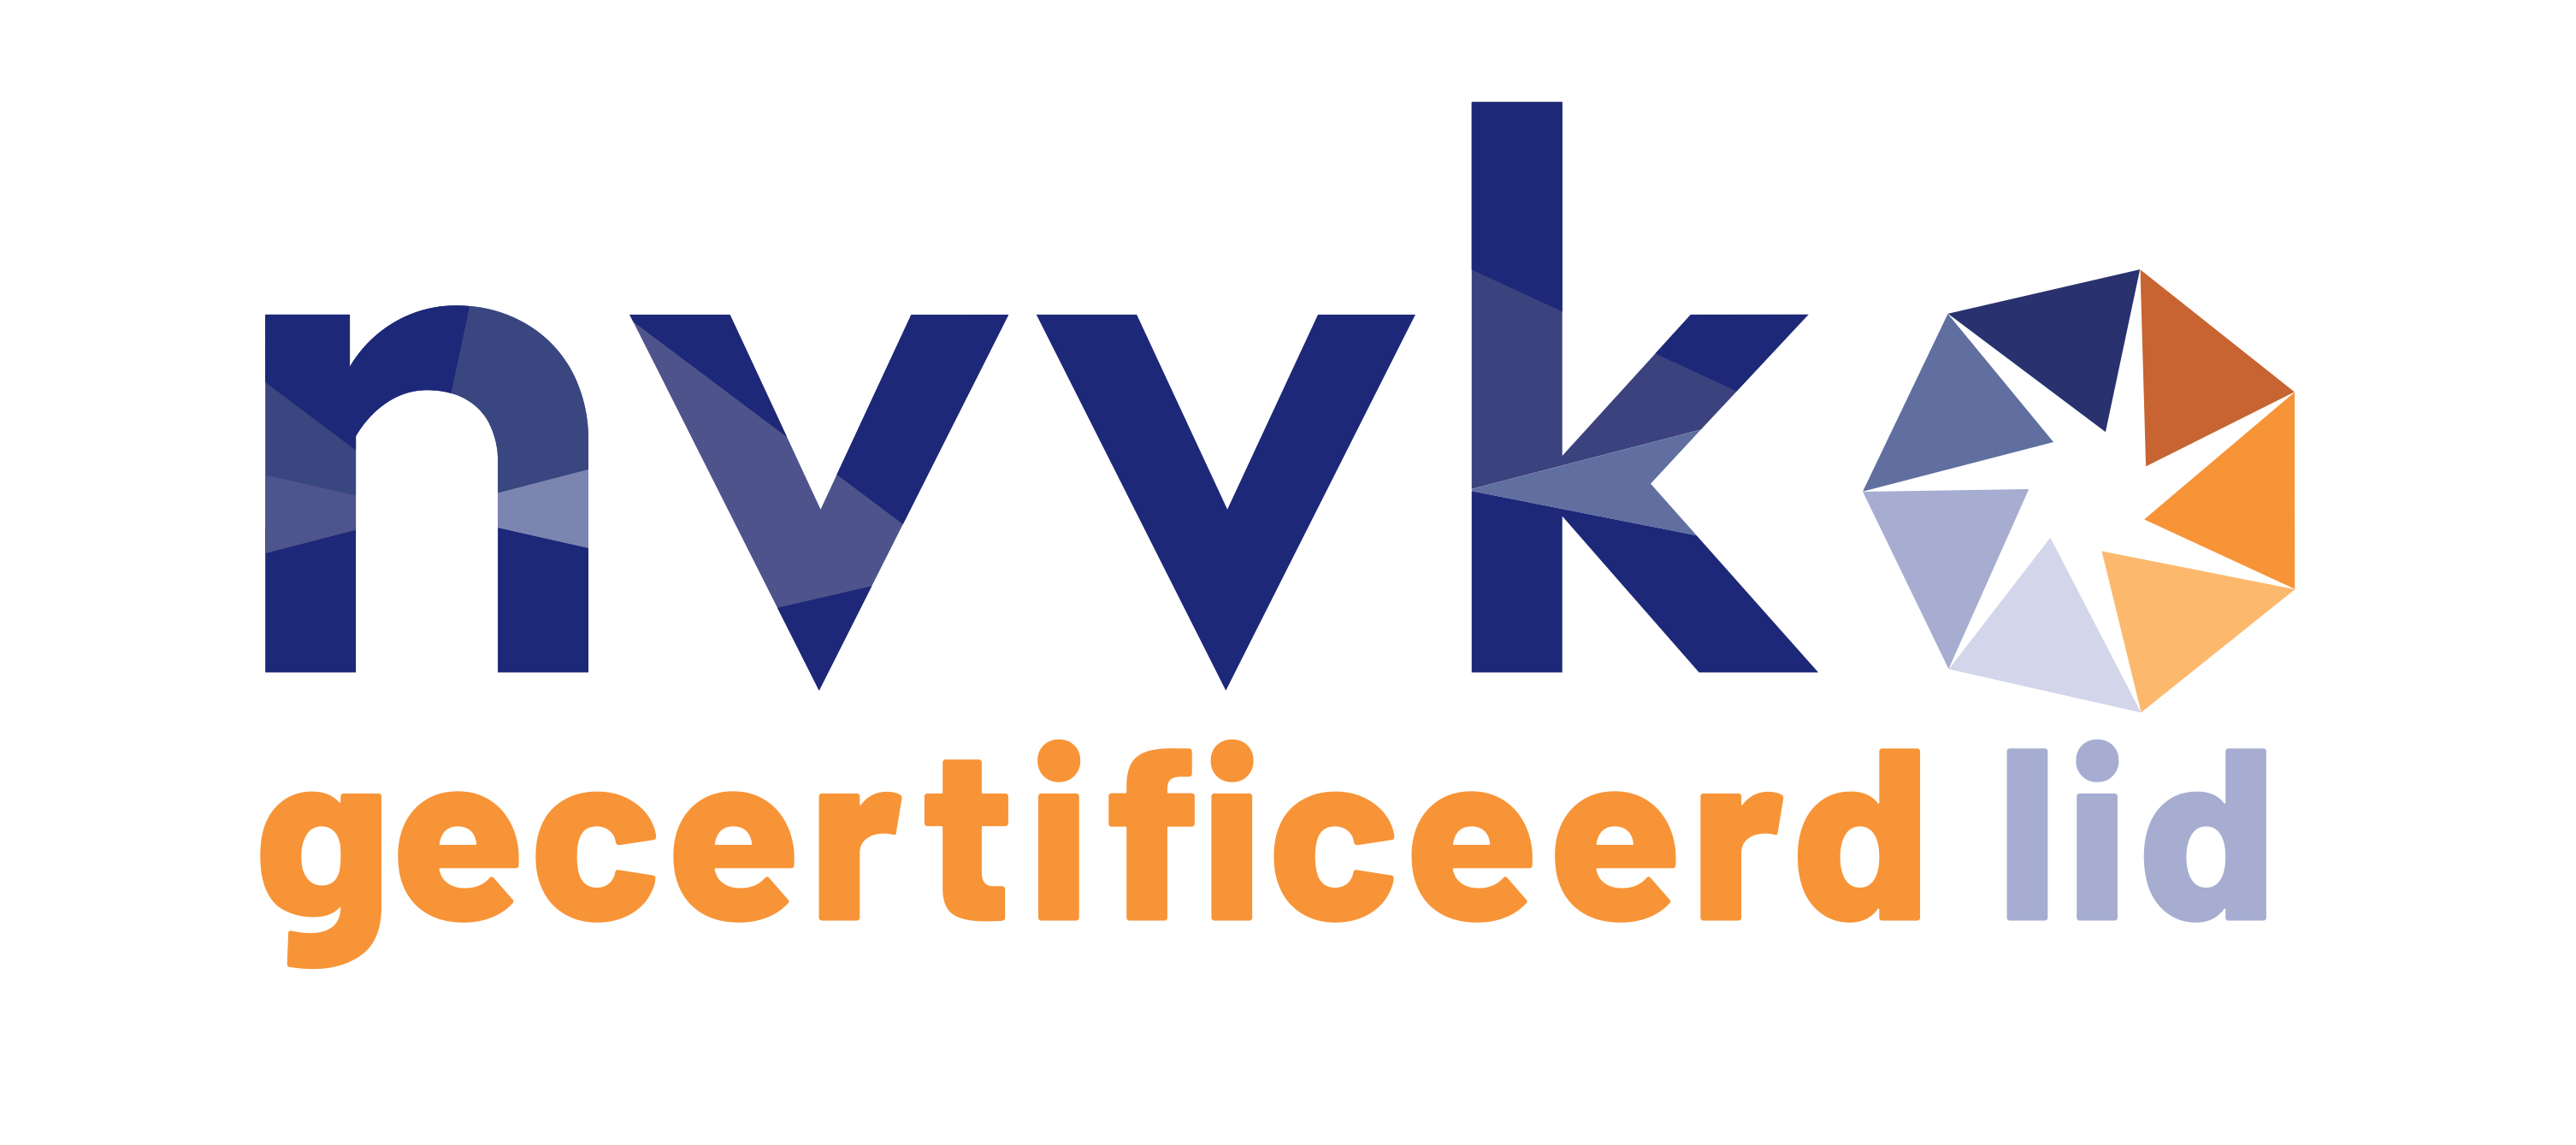 Logo-gecertificeerdNVVKlid-2021